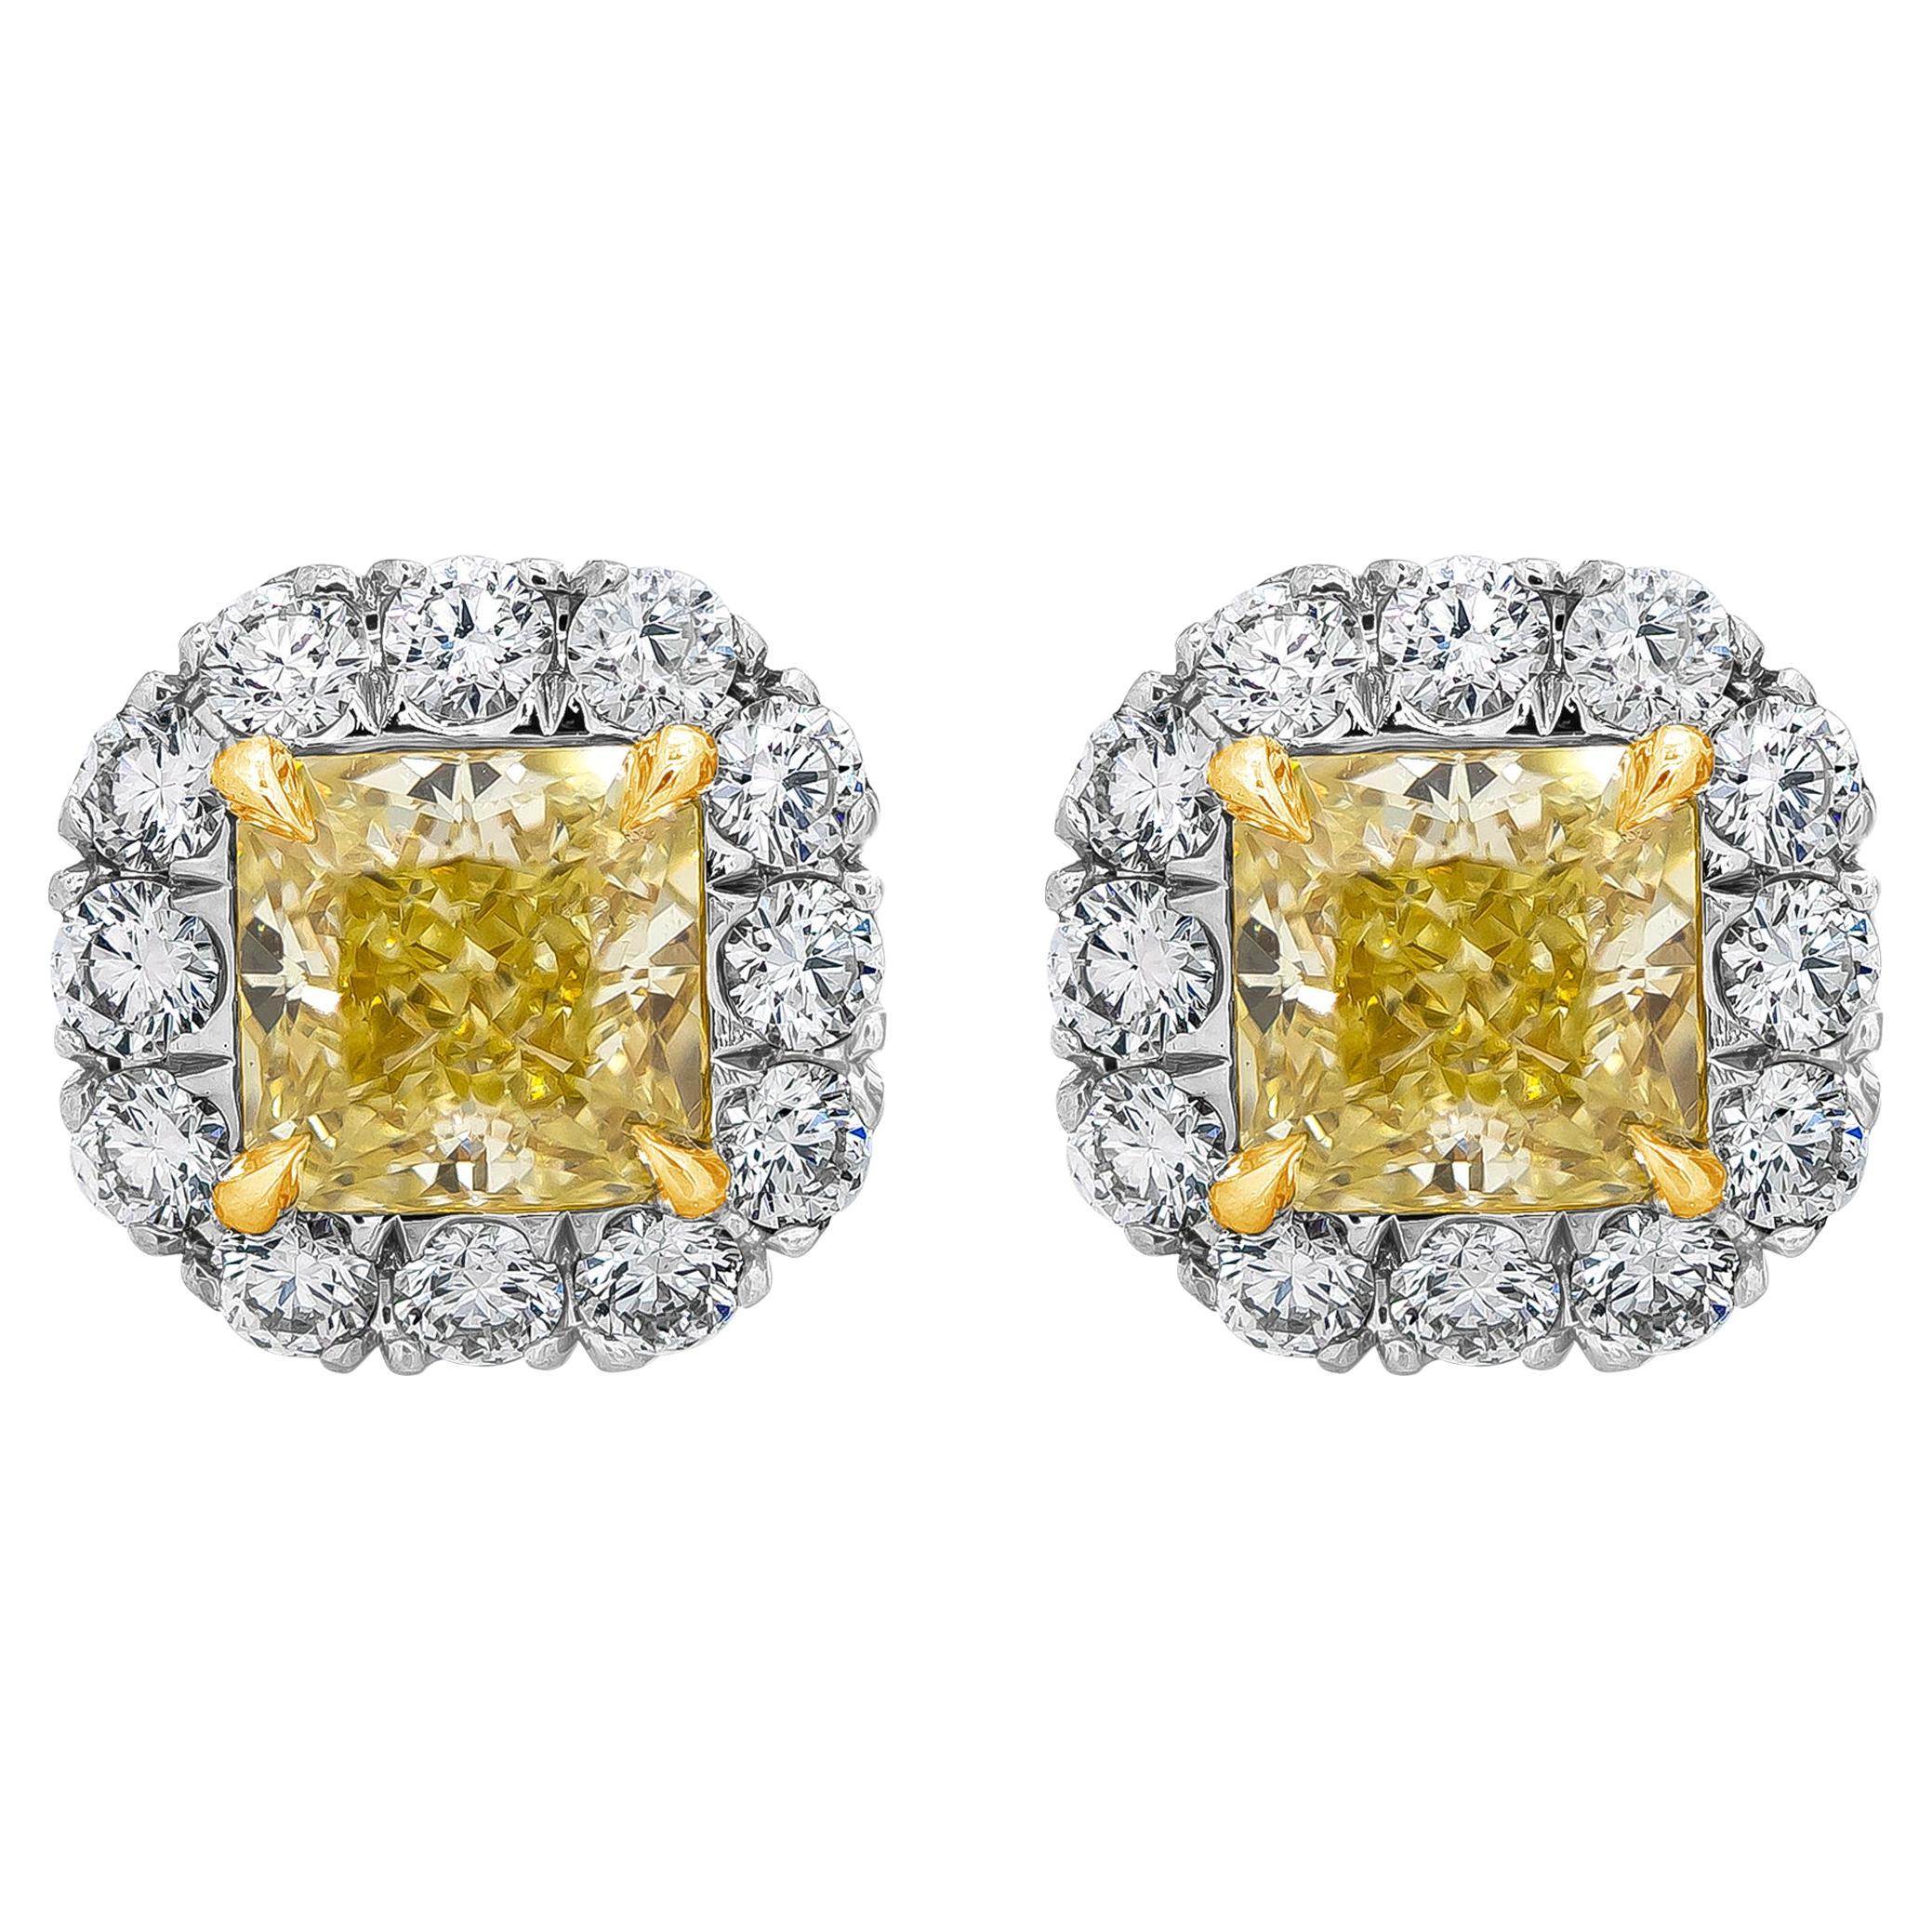 GIA Certified 1.45 Carats Total Radiant Cut Fancy Yellow Diamond Stud Earrings